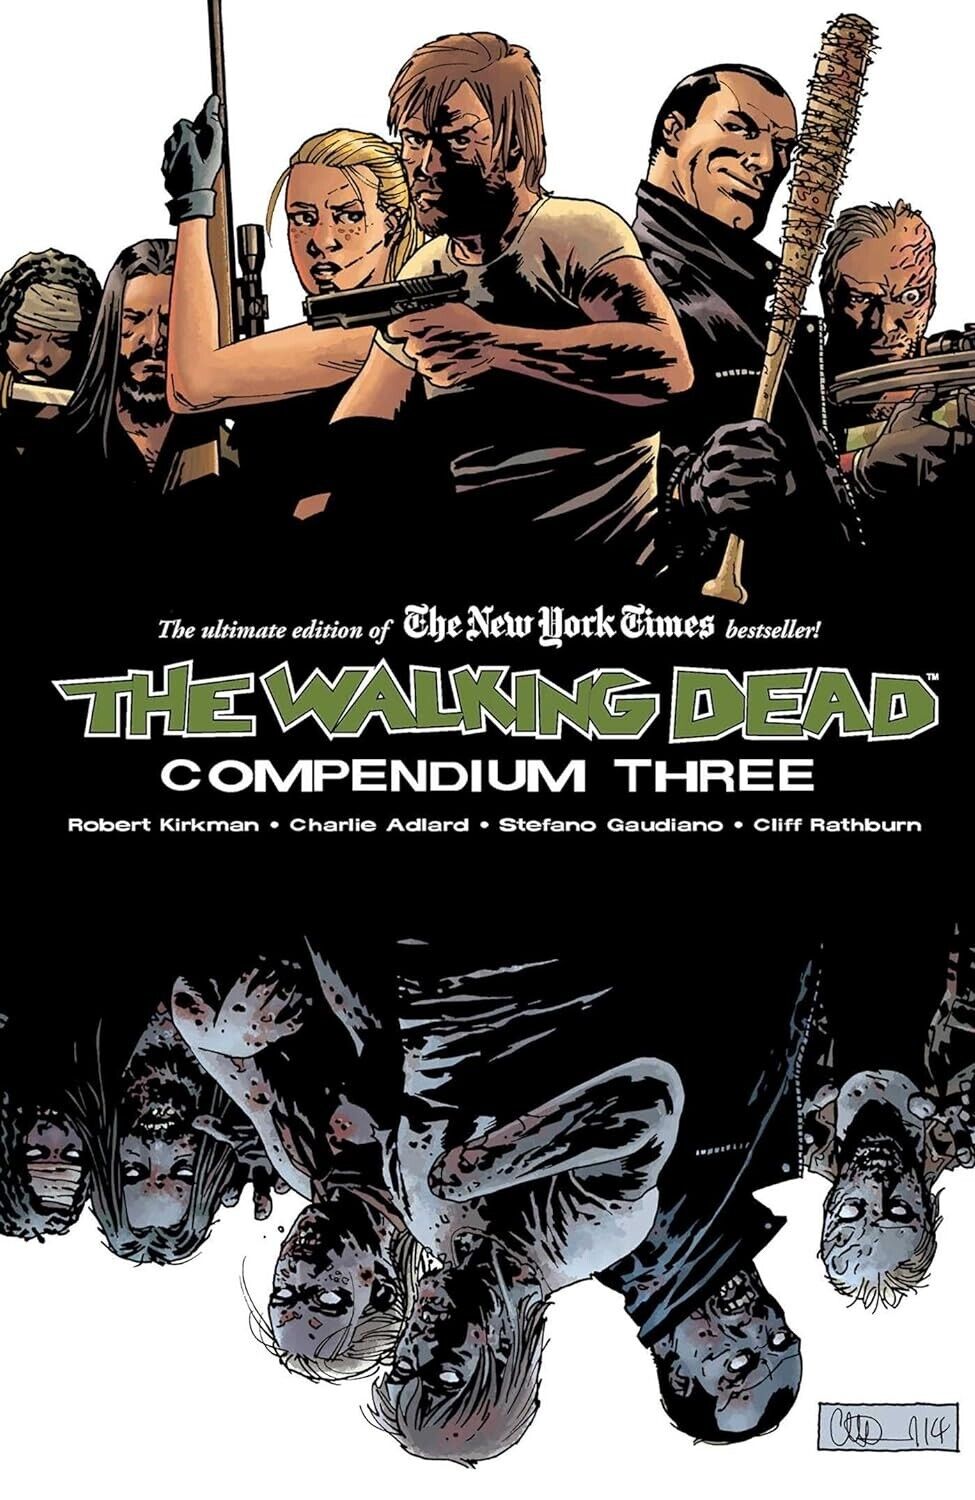 The Walking Dead: Compendium Three  Paperback Robert Kirkman 1088 pg BRAND NEW